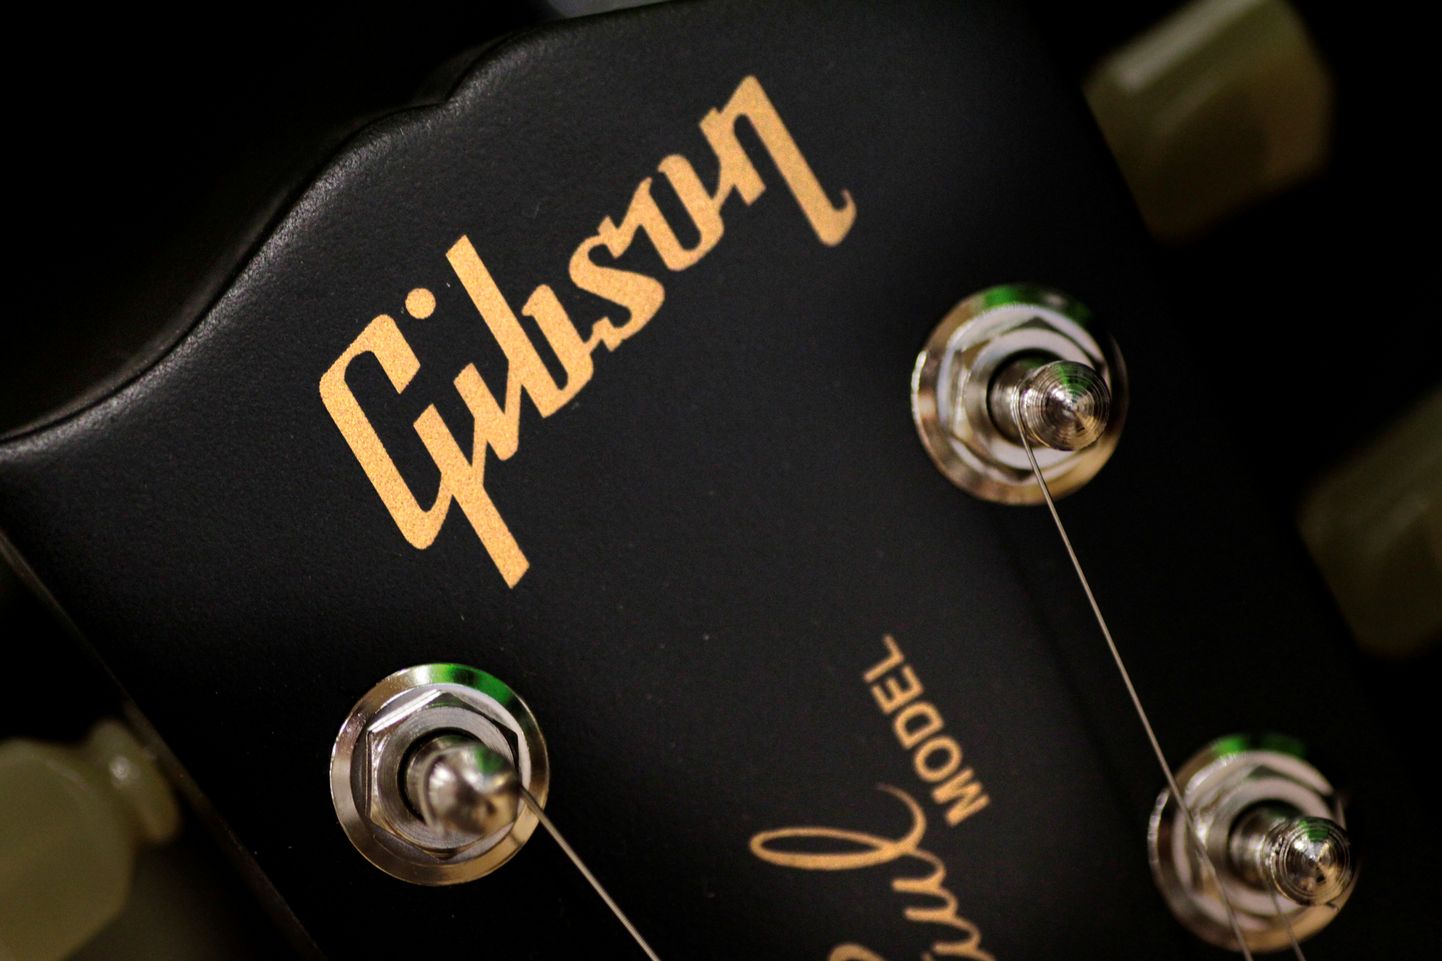 Gibsoni logo Les Paul kitarril.